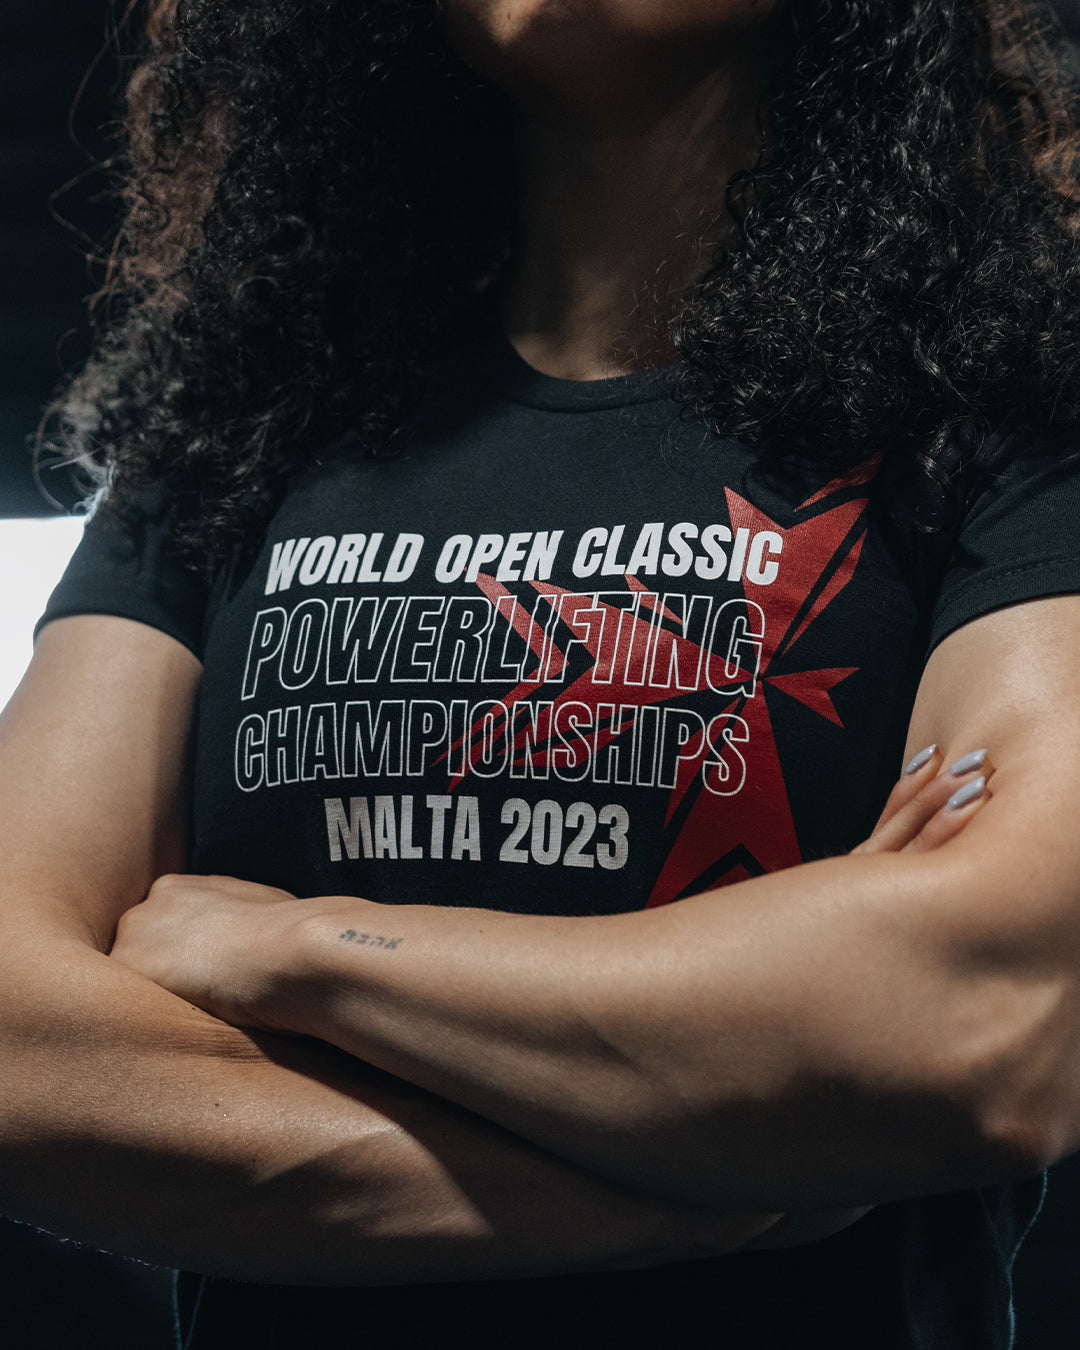 World Championship classic open 2023 shirt - Malta